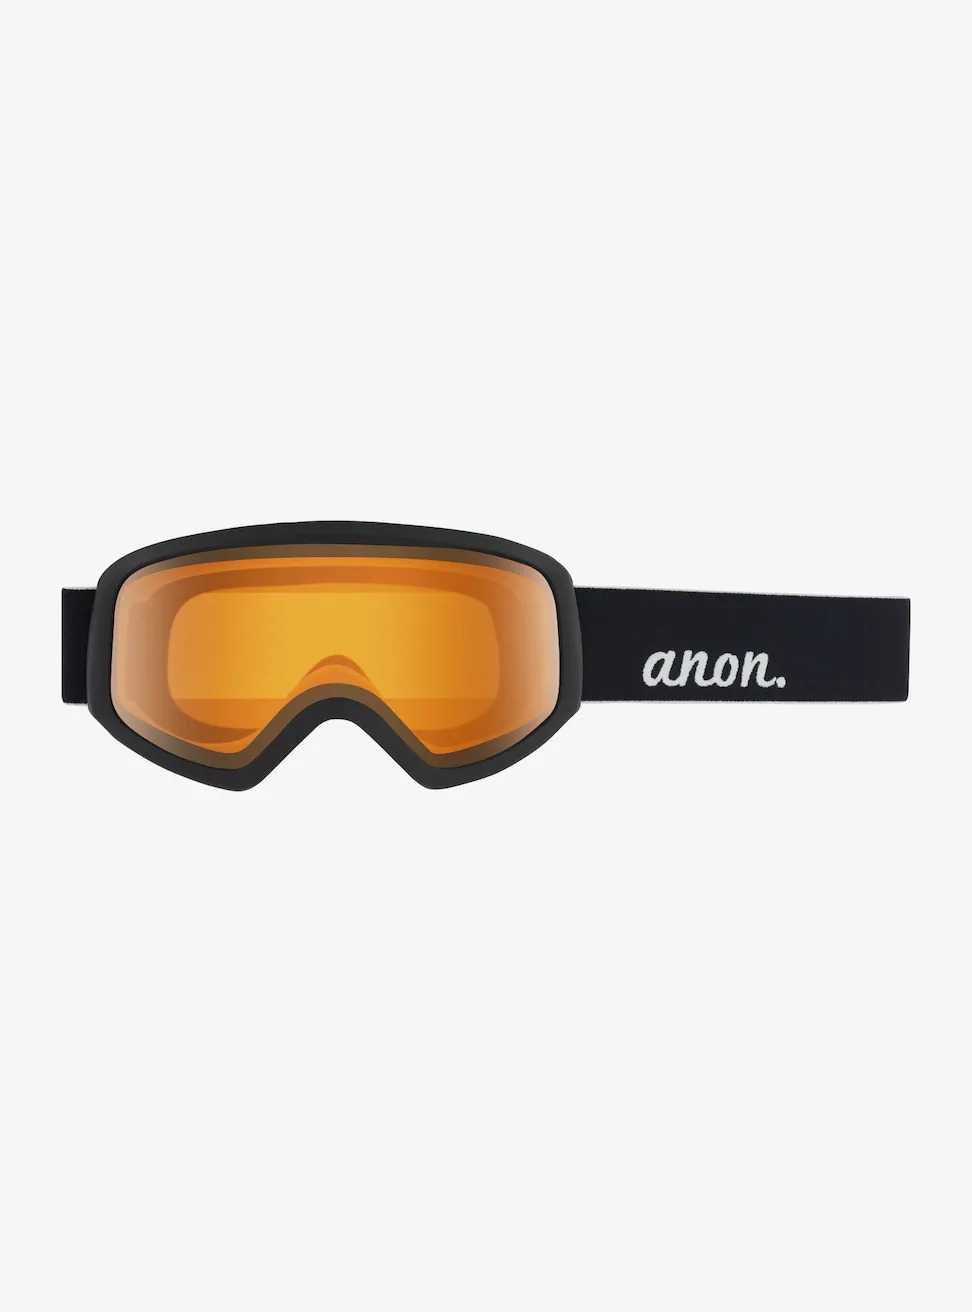 Anon/Burton Insight, нова, оригинална ски/сноуборд дамска маска/очила